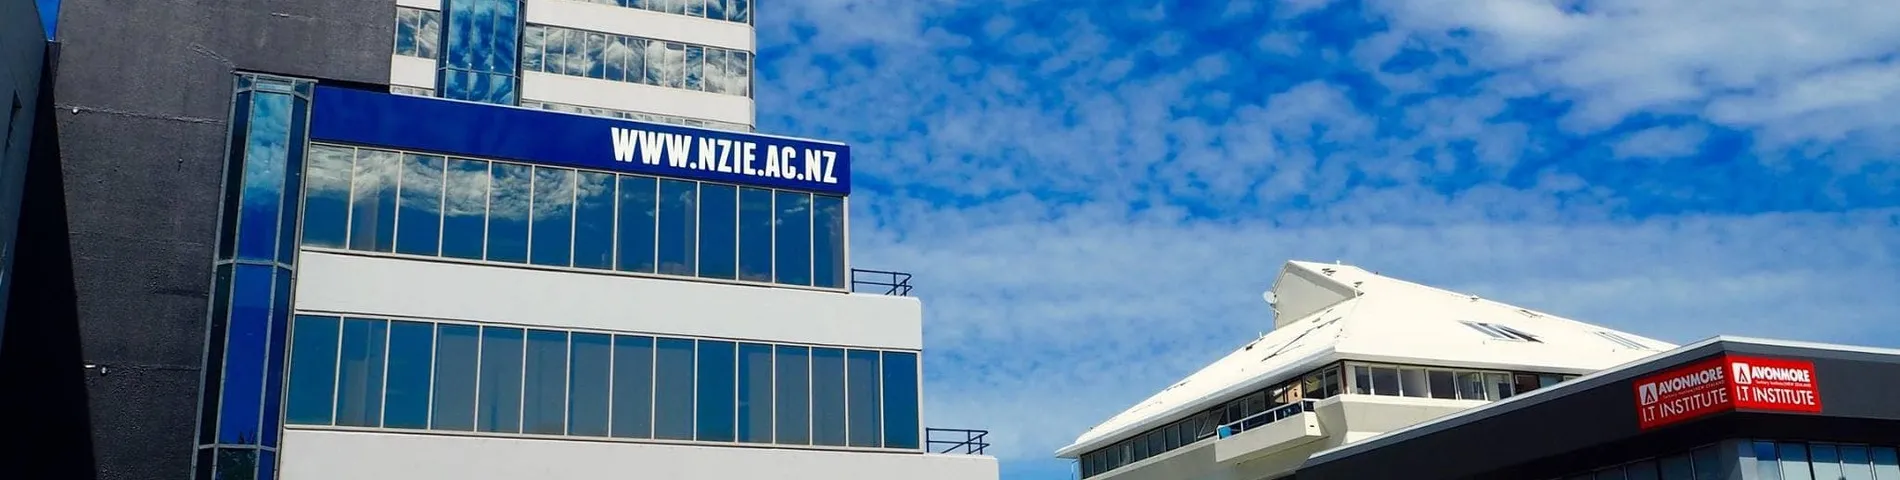 NZIE - New Zealand Institute of Education resim 1